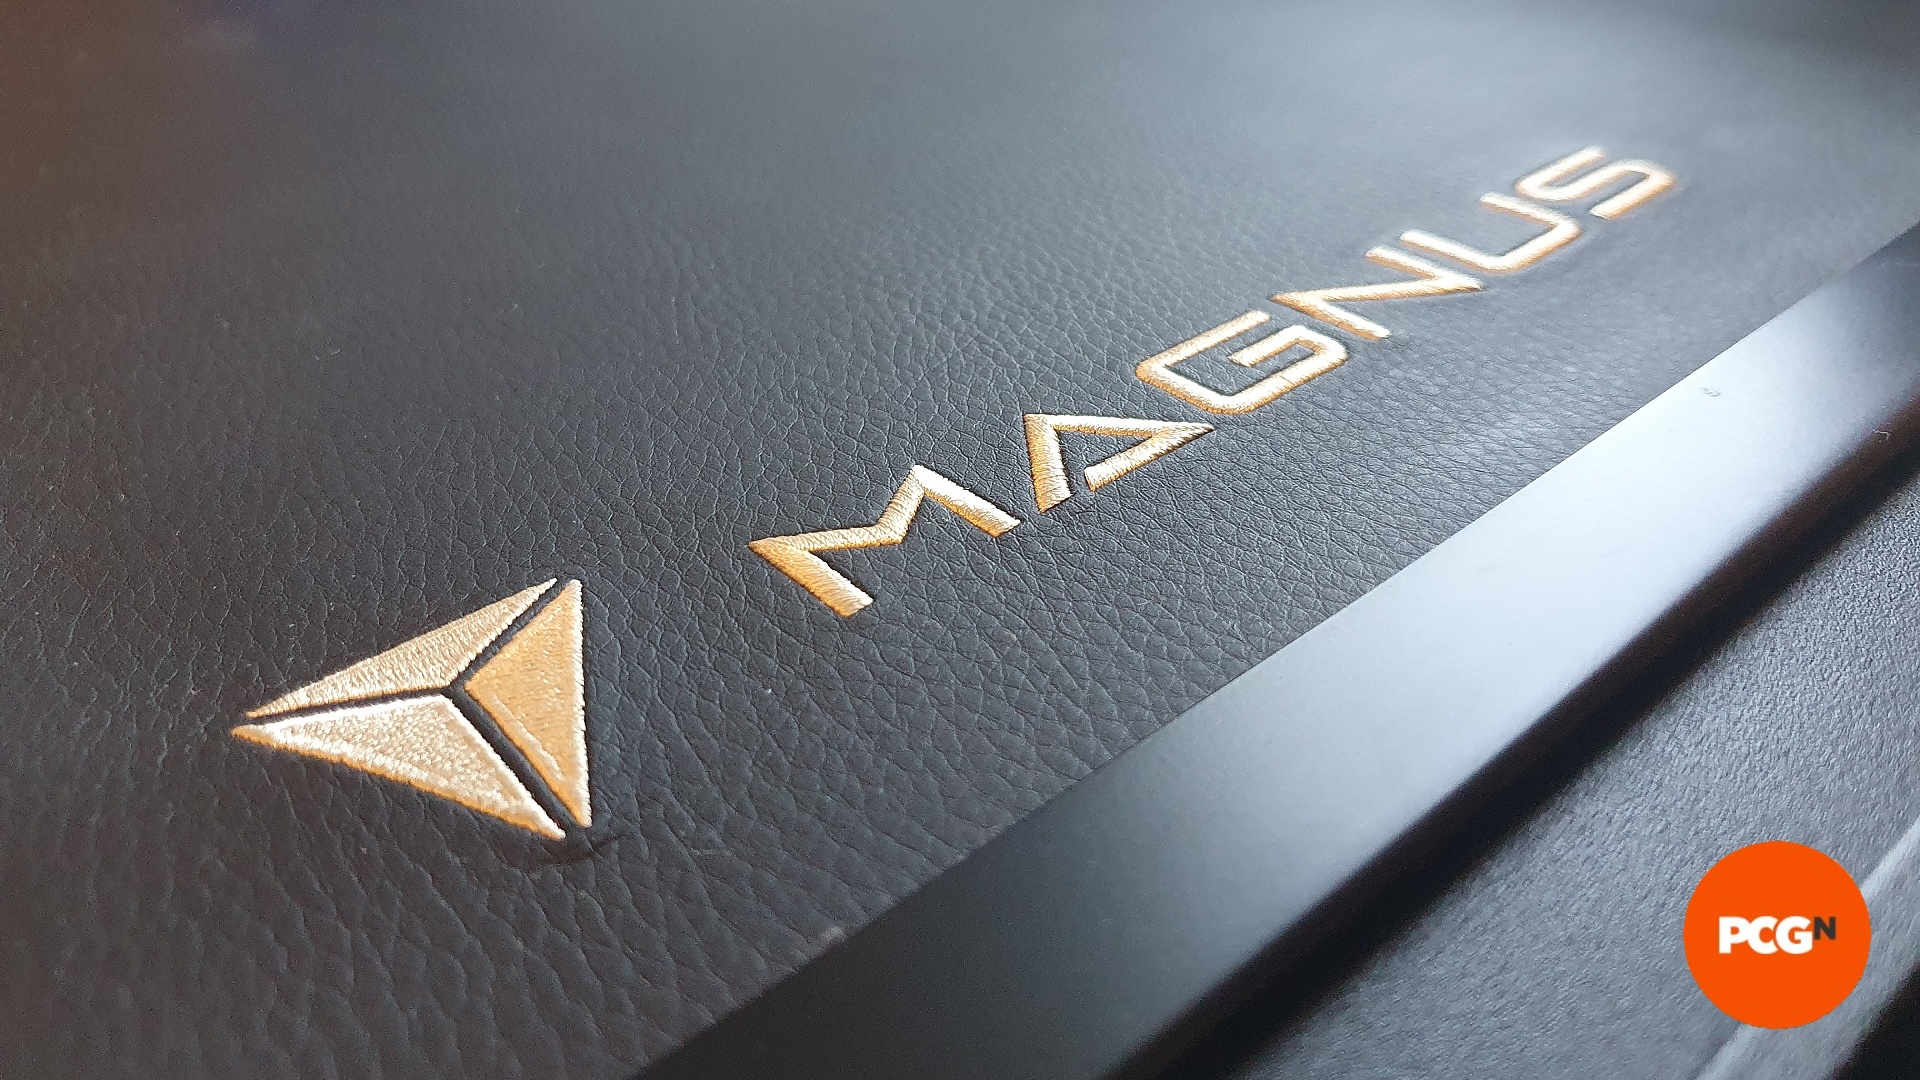 Secretlab Magnus Pro review image showing the brand logo.